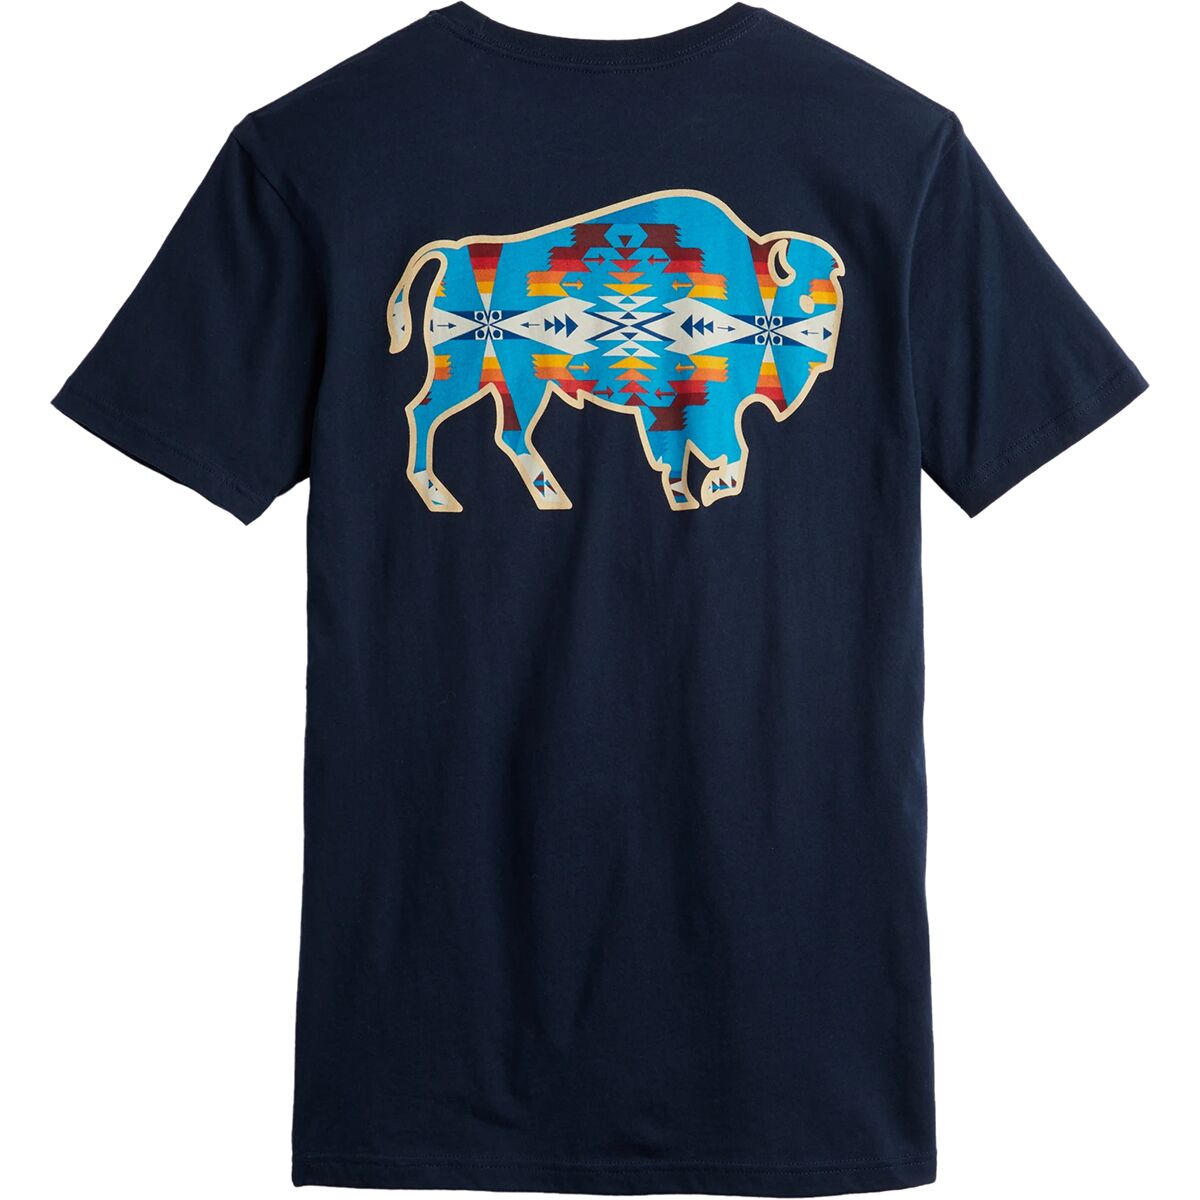 Tucson Bison Graphic Short-Sleeve T-Shirt - Men